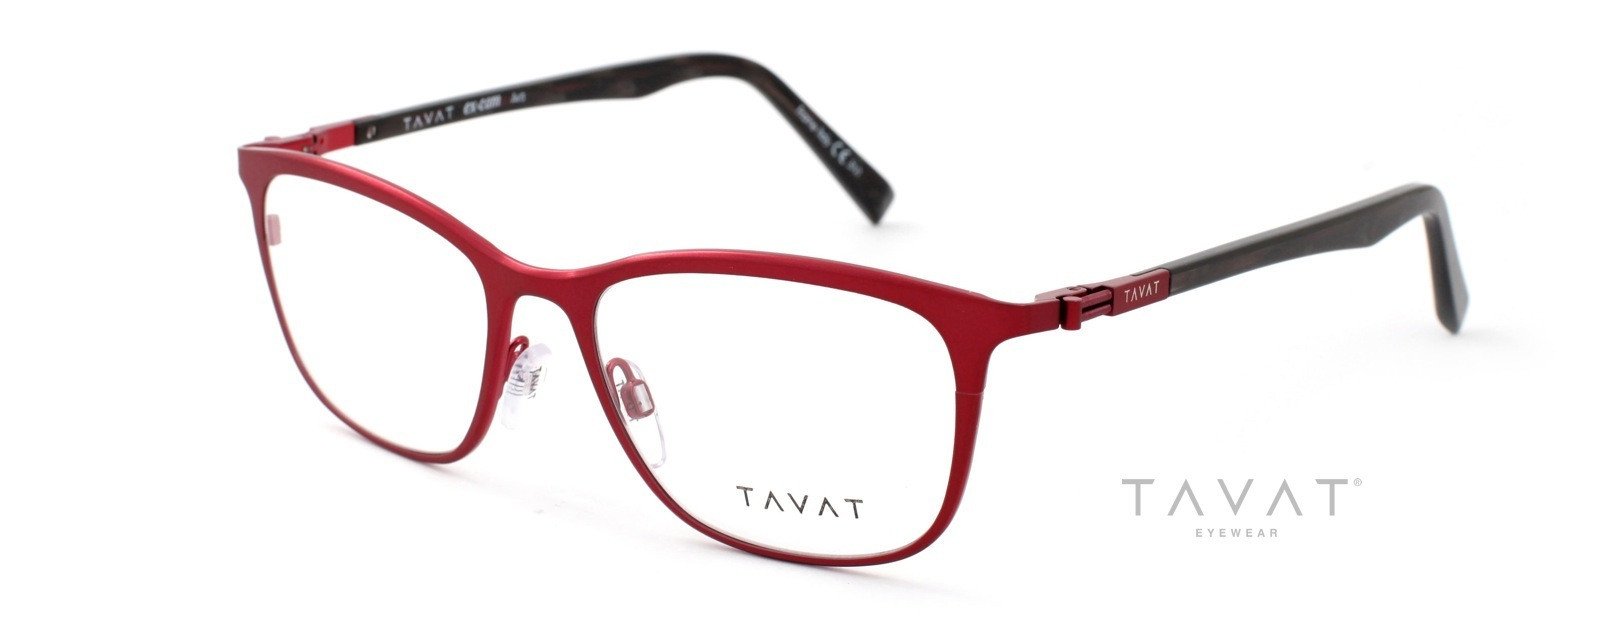 Alexander Daas - Tavat Ava EX308T Eyeglasses - Red - Side View